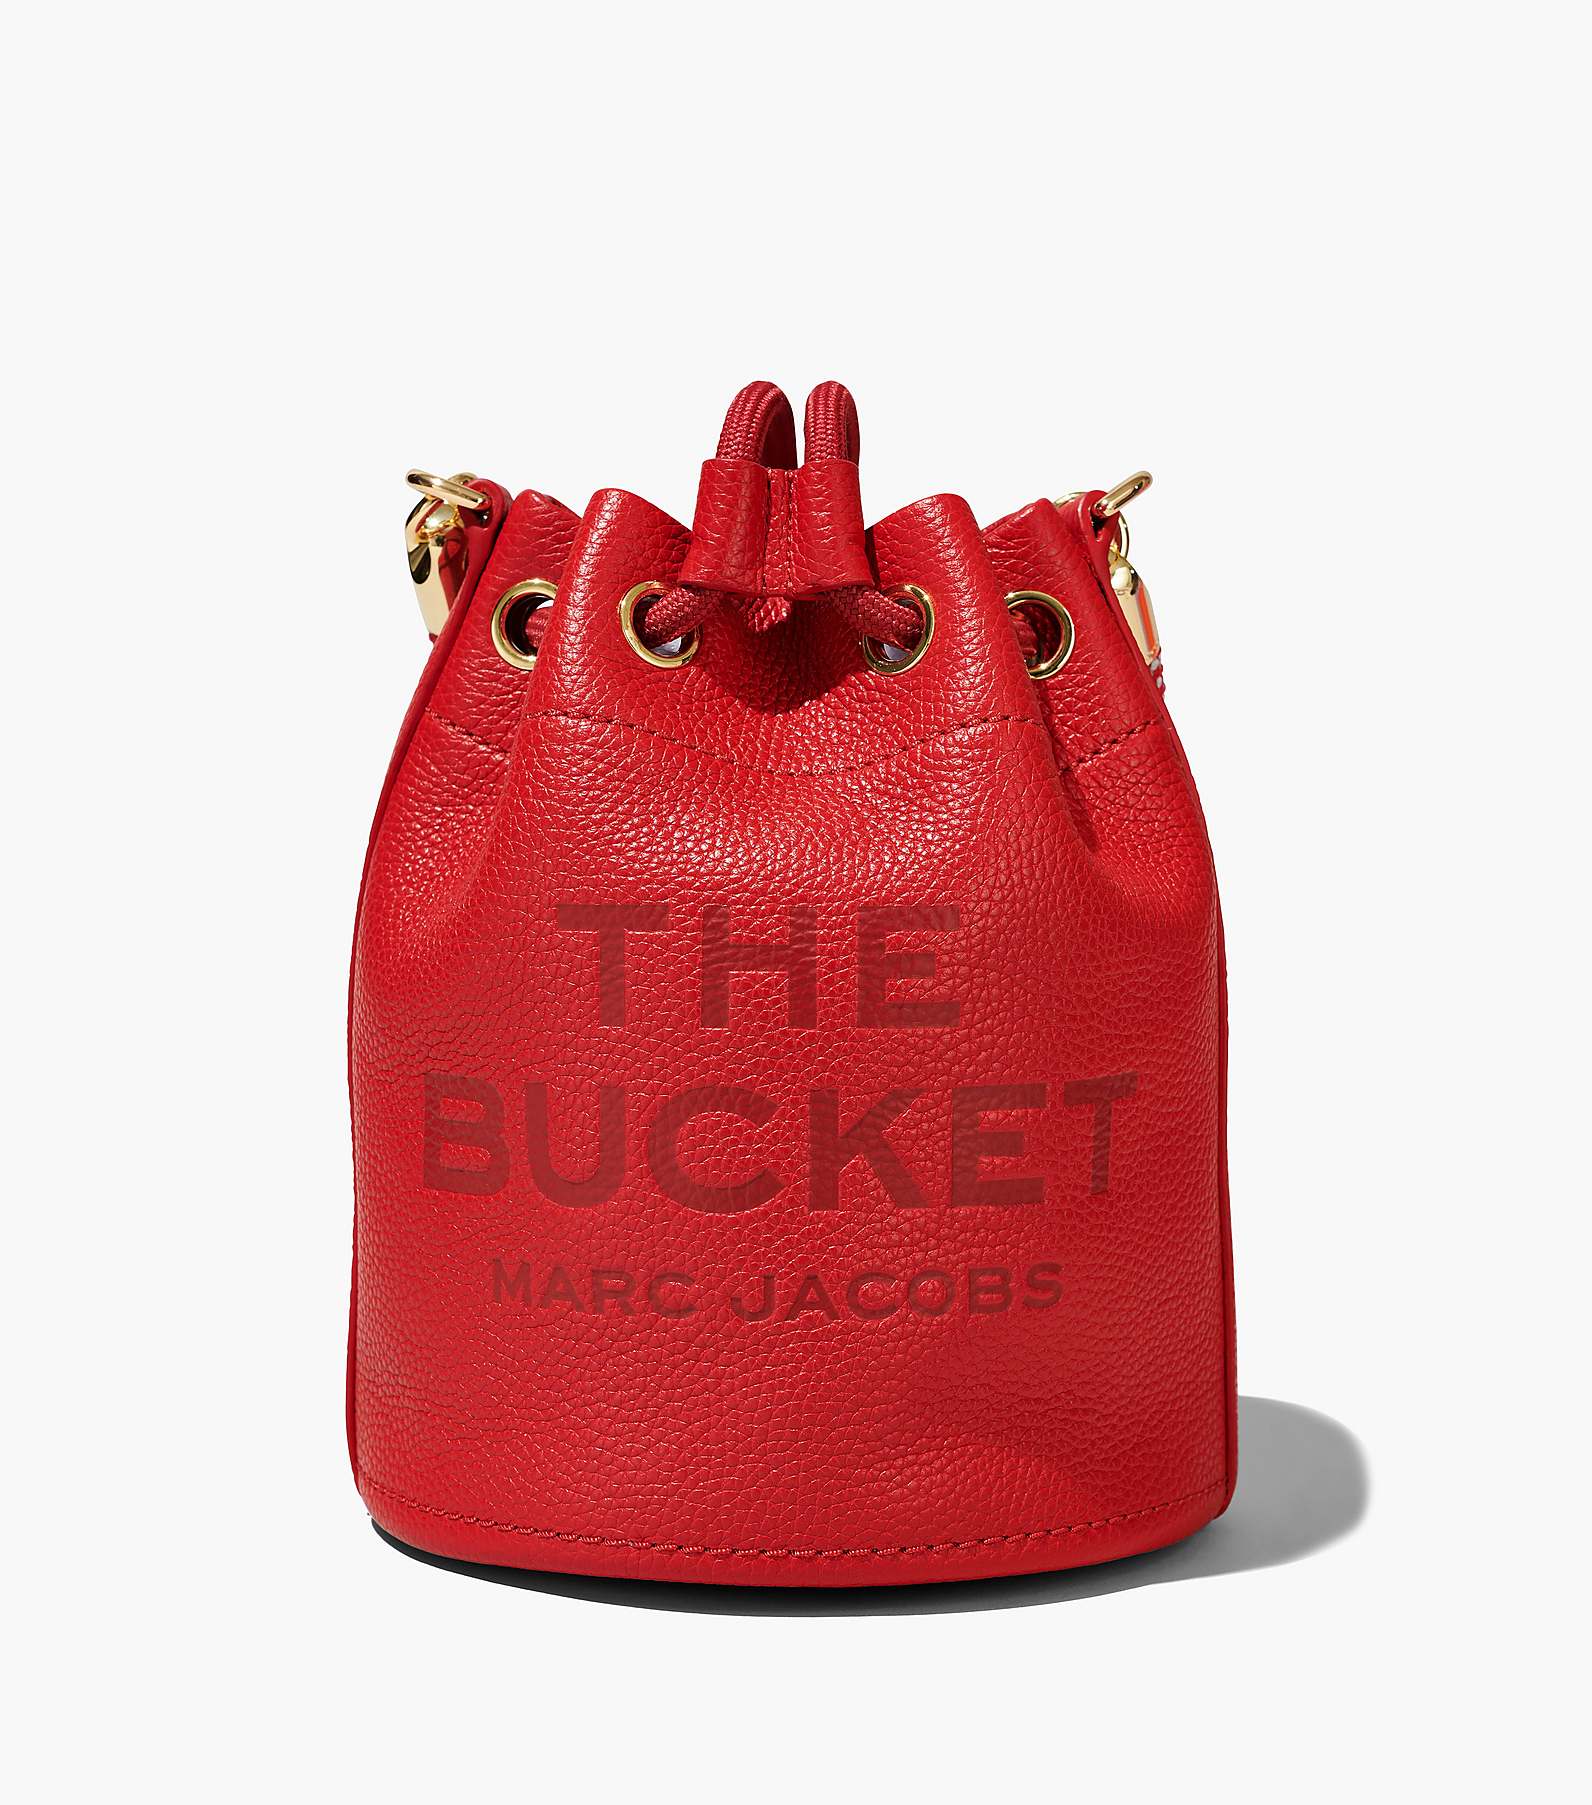 The Leather Micro Bucket Bag(The Bucket)